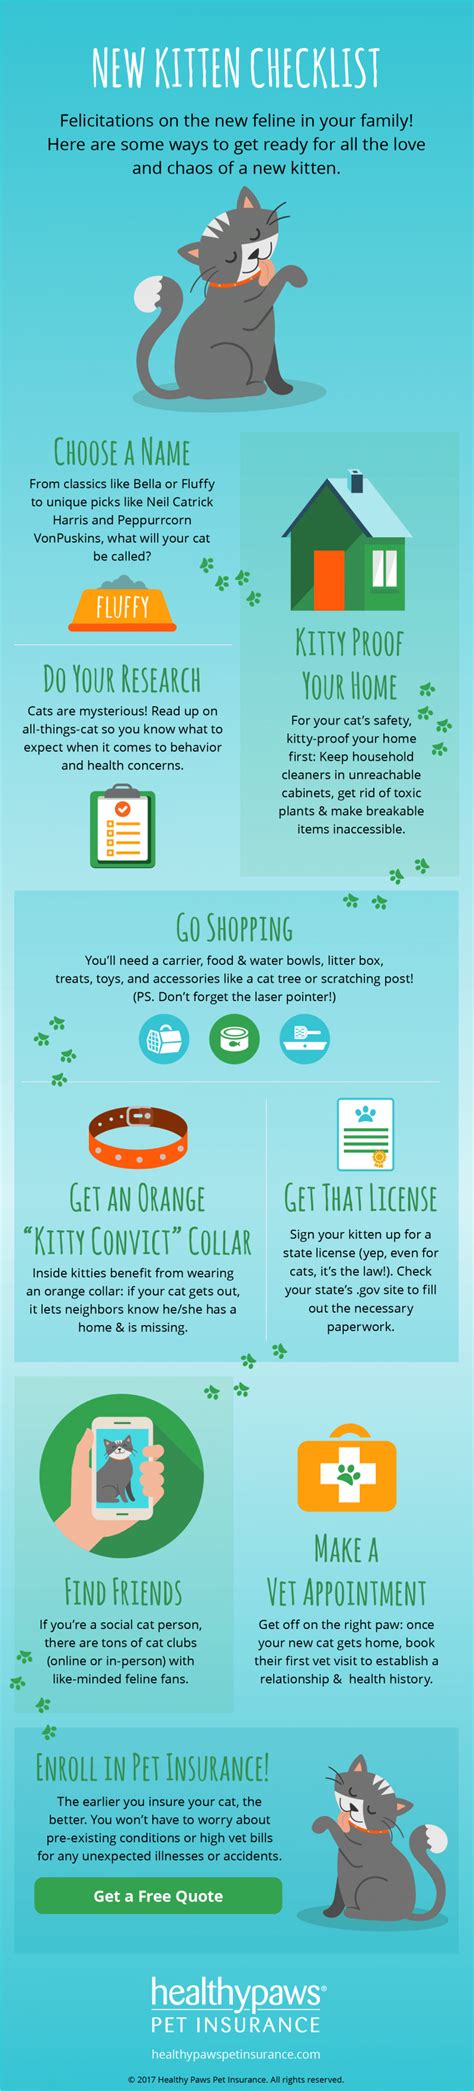 new kitten checklist a guide to preparing for a new kitten kitnipbox